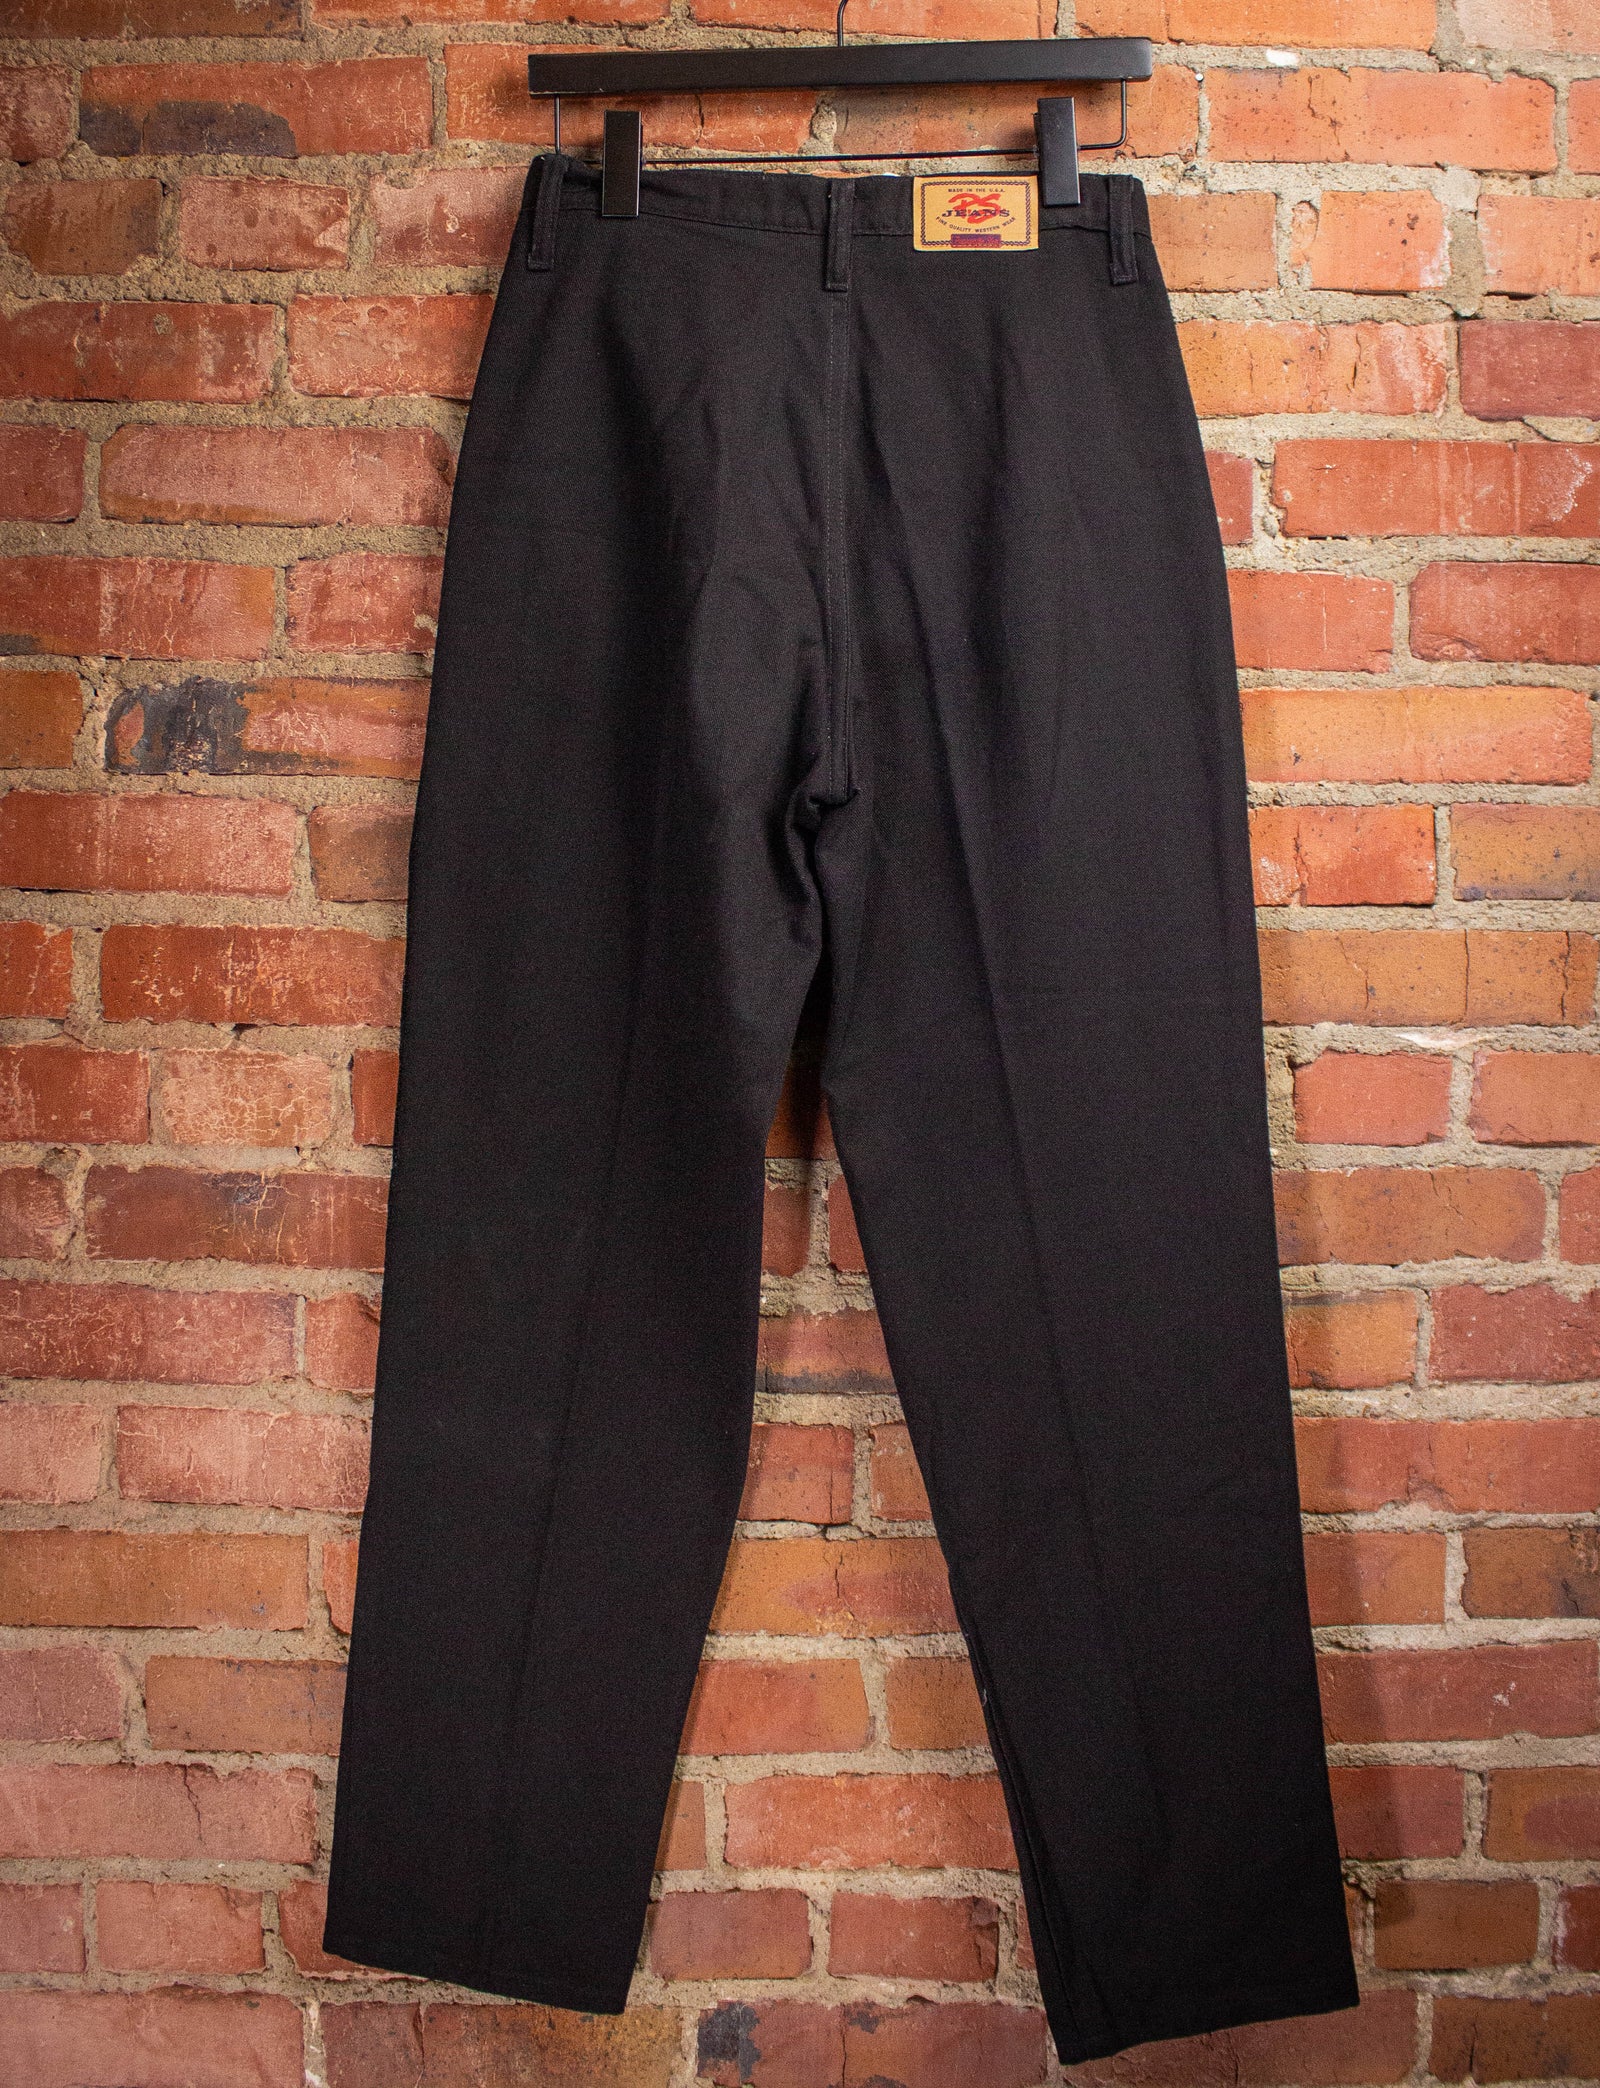 Vintage Panhandle Slim Black Lace Jeans 1990s 28W